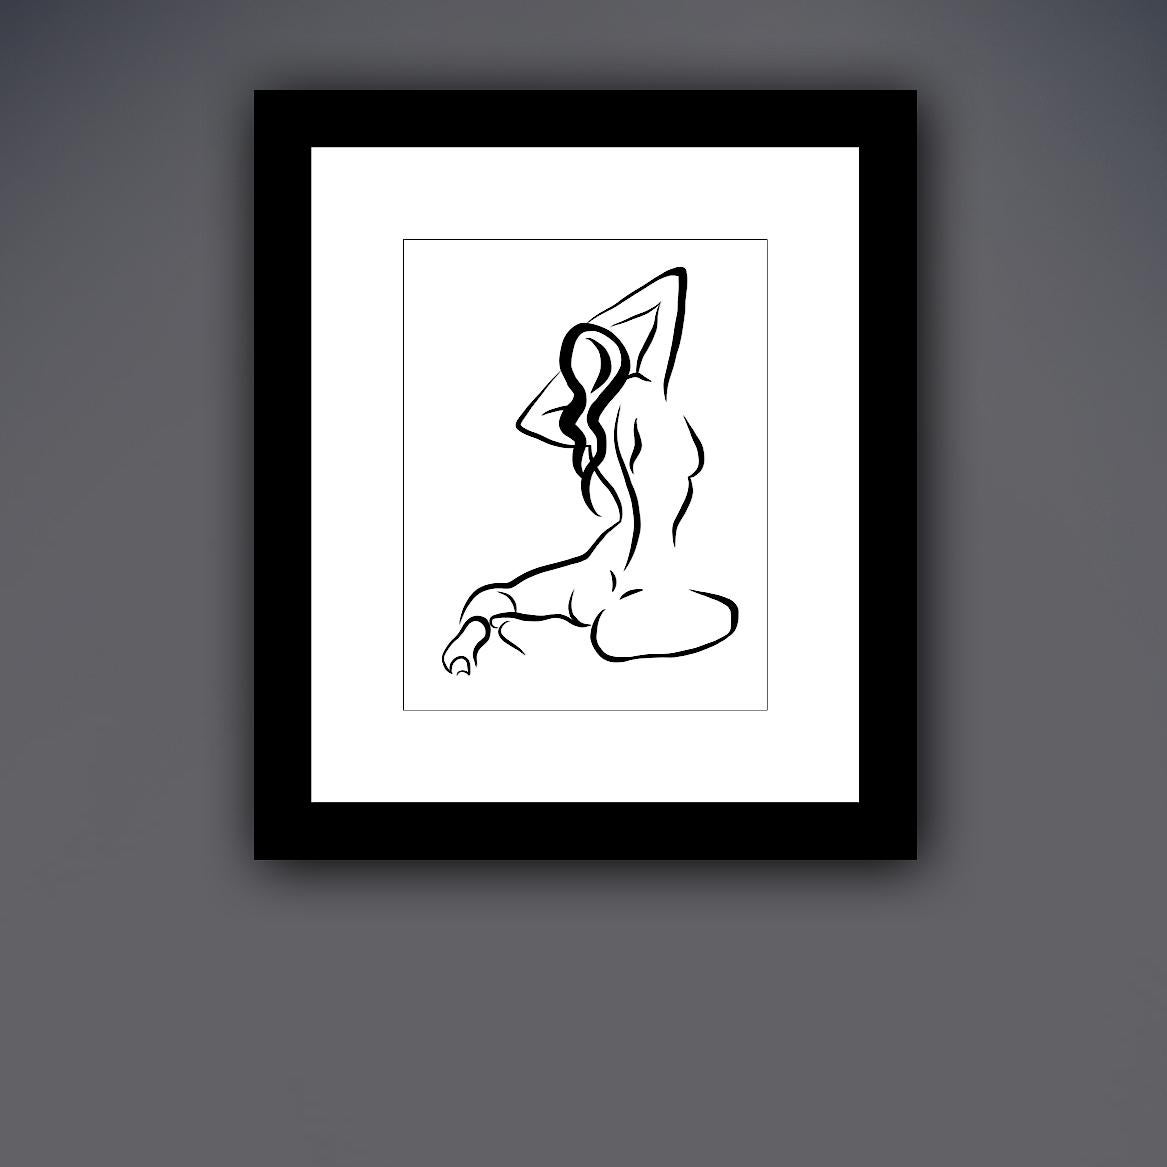 Haiku #17 - Digital Vector Drawing of Seated Female Nude from Behind - Contemporary Print by Michael Binkley